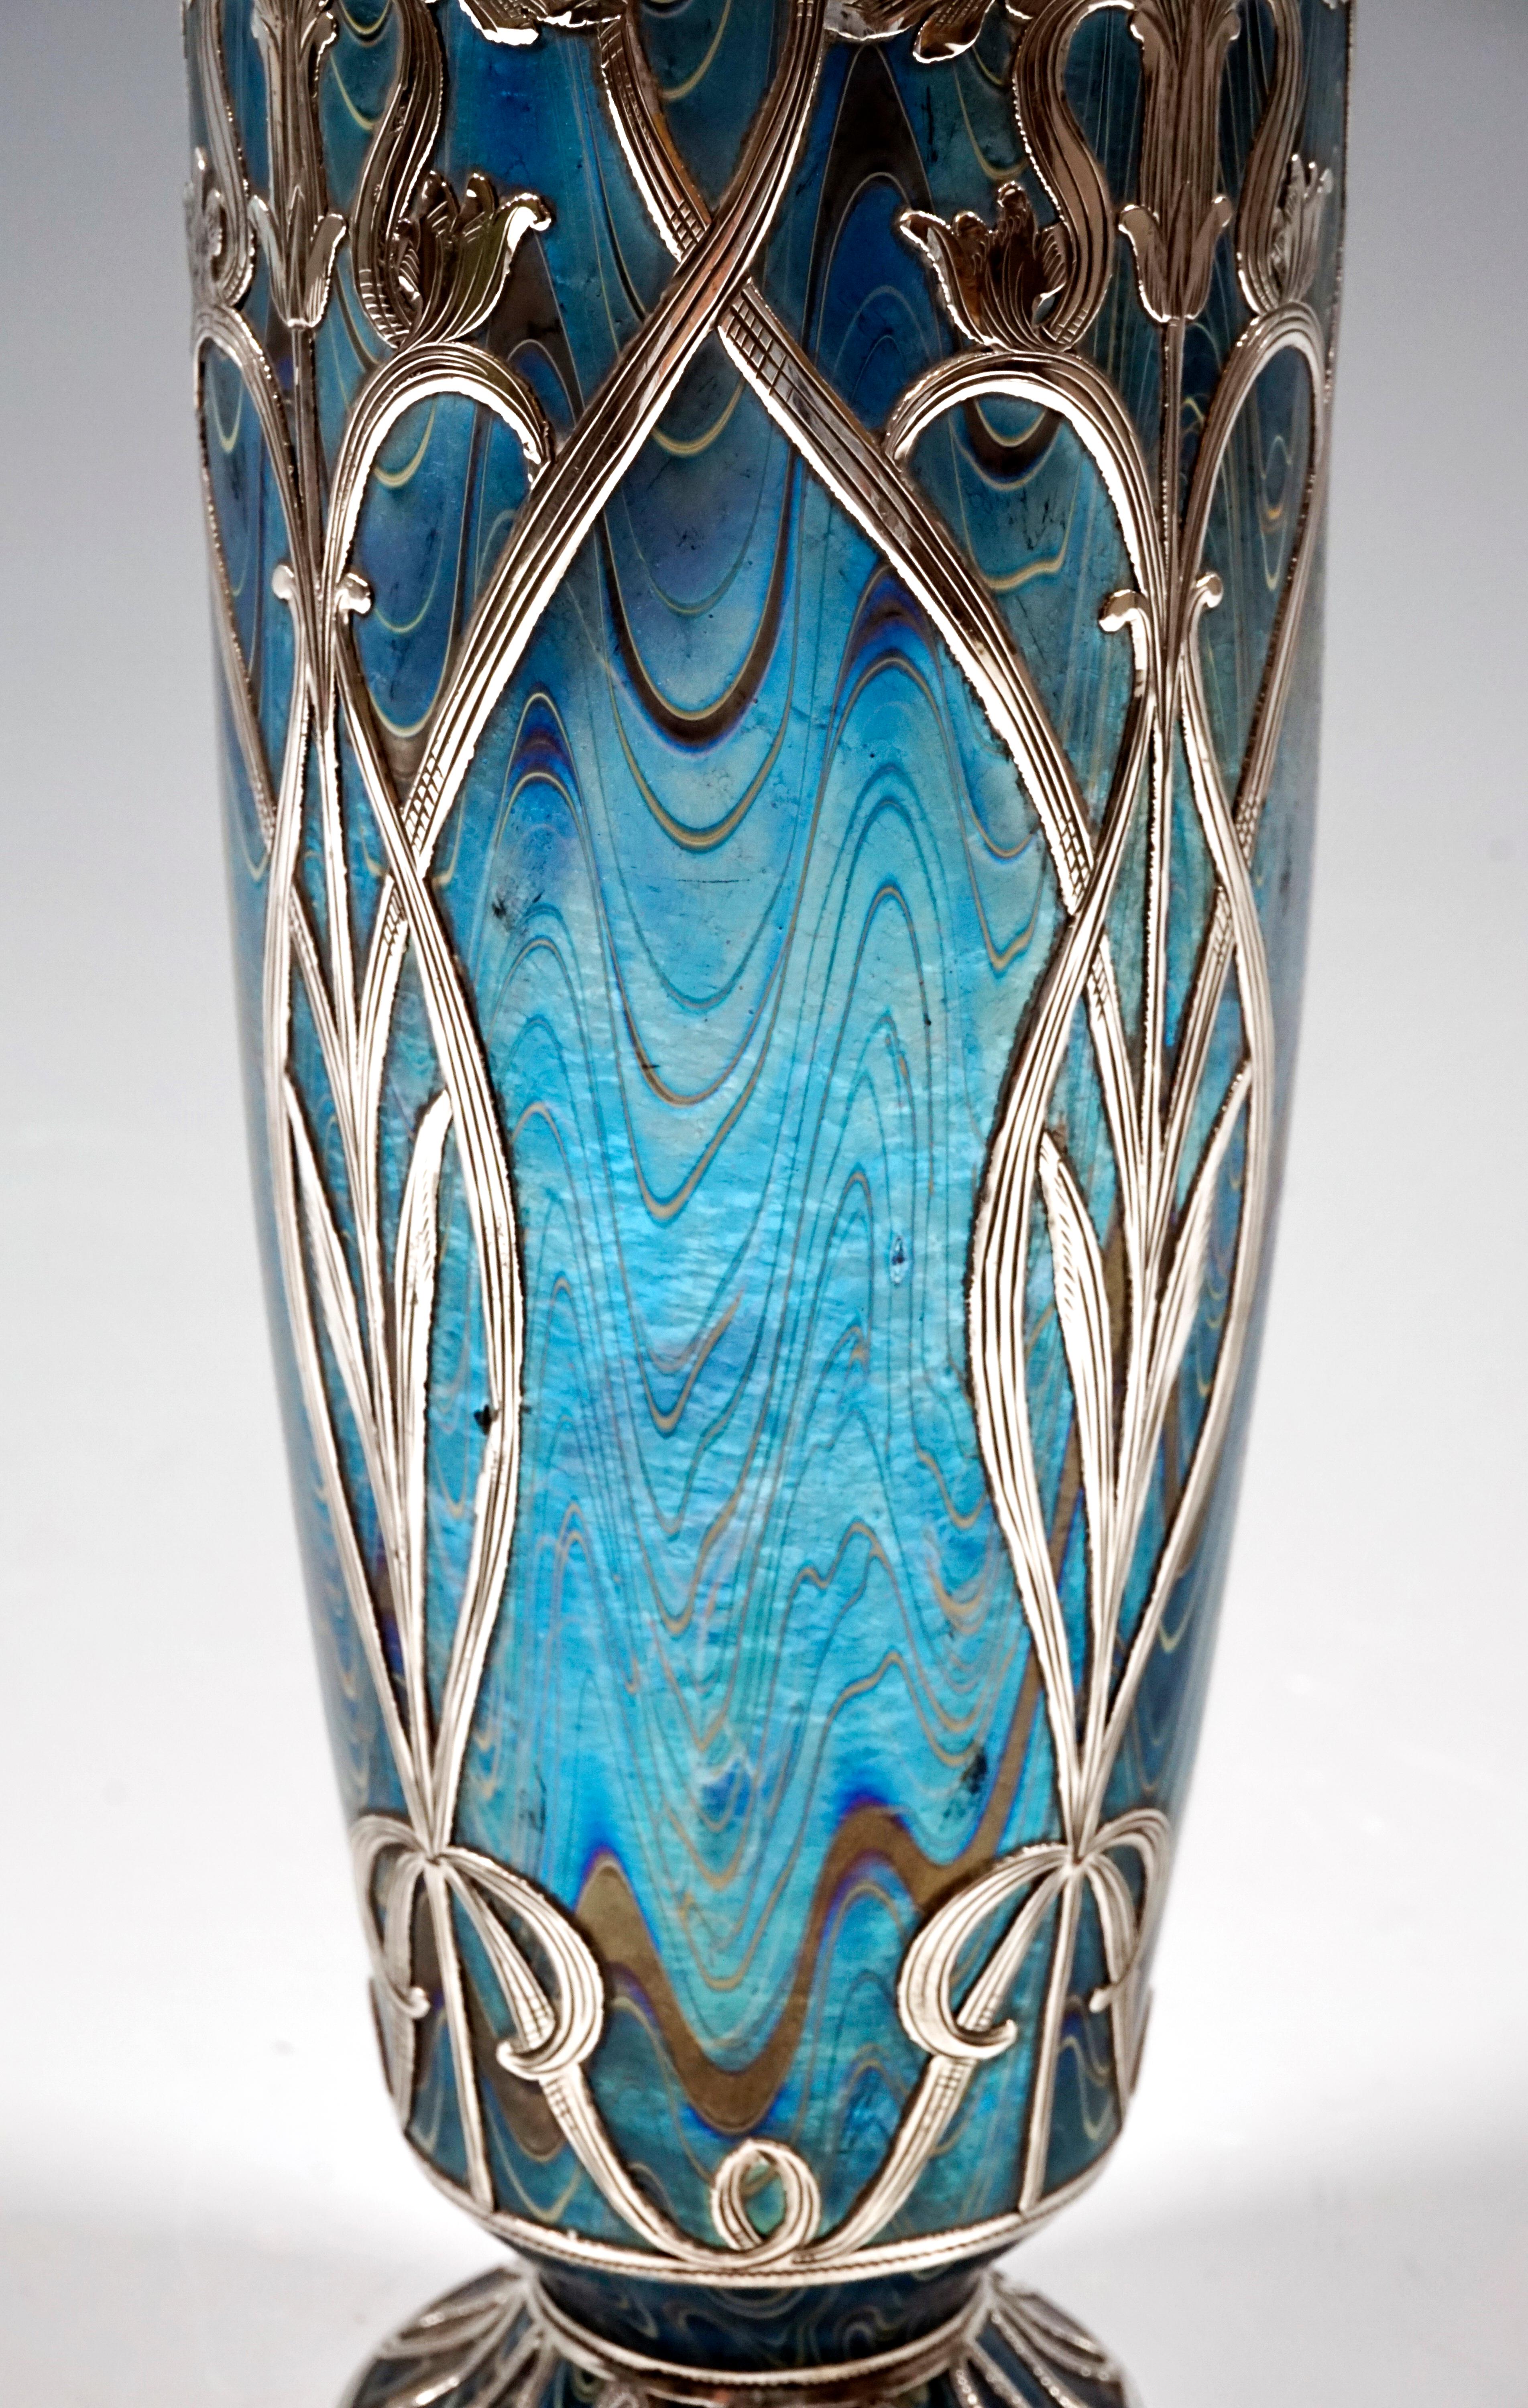 Early 20th Century Loetz Art Nouveau Vase Phenomenon Genre Ruby 6893 with Silver Overlay circa 1899